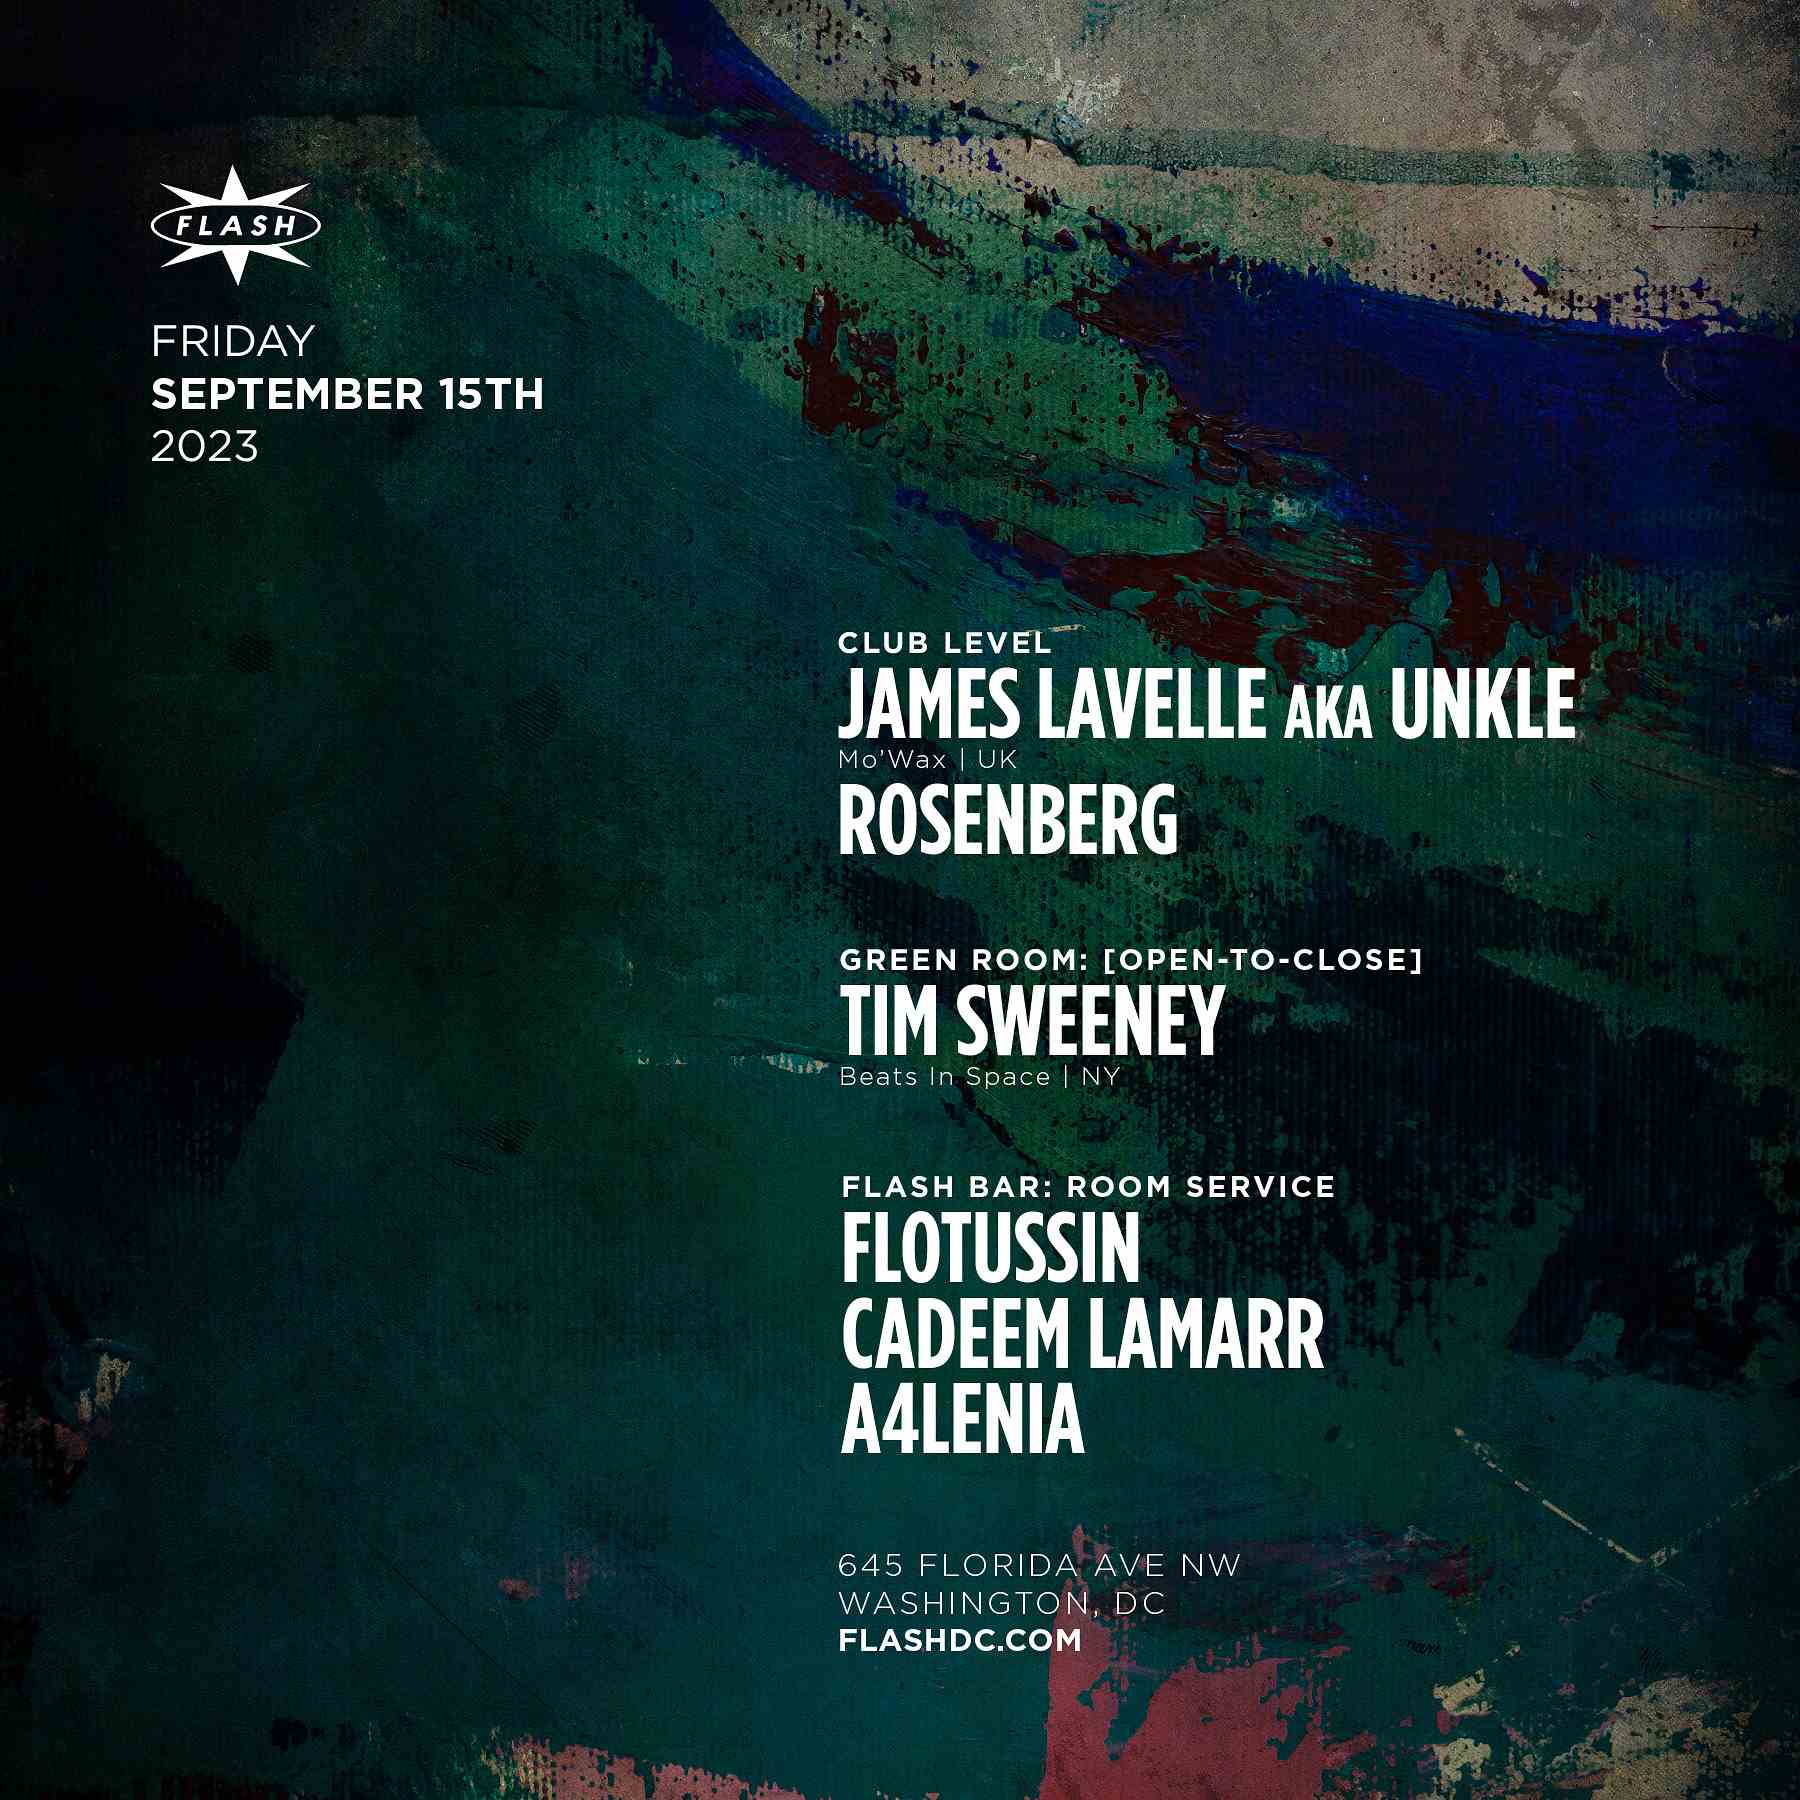 James Lavelle aka UNKLE event flyer